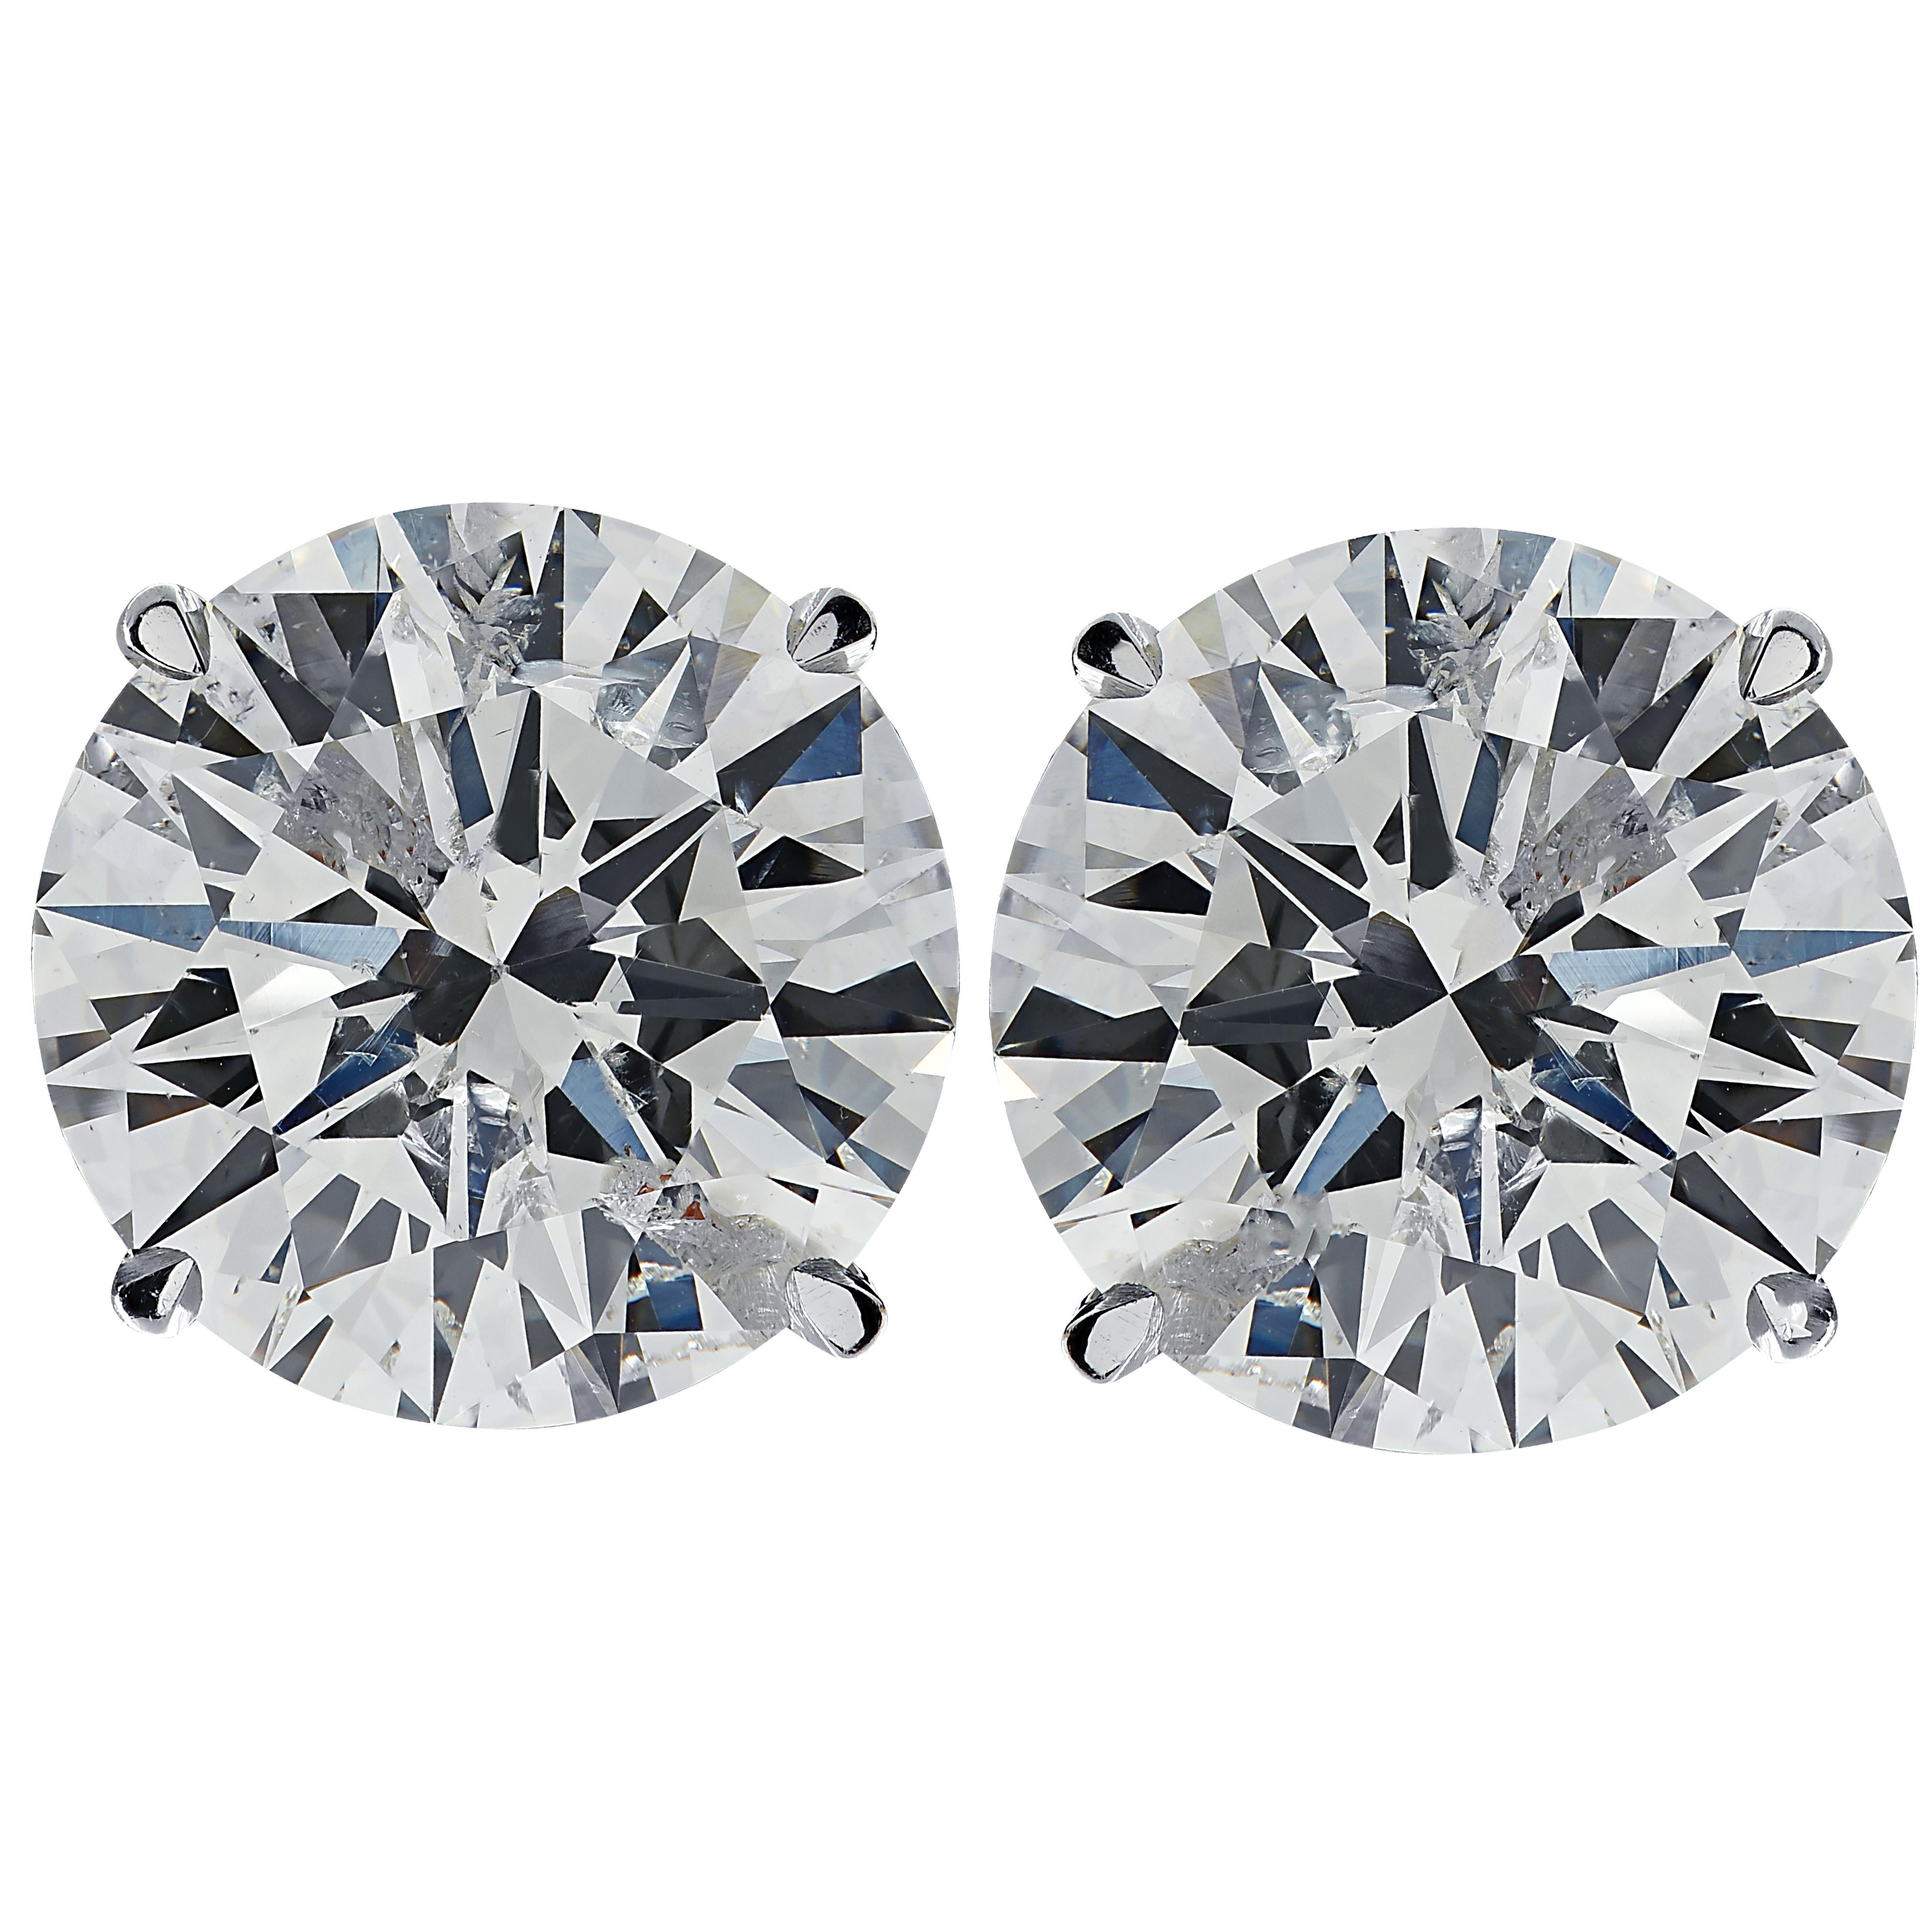 Round Cut Vivid Diamonds GIA Certified 6.02 Carat Diamond Solitaire Stud Earrings For Sale